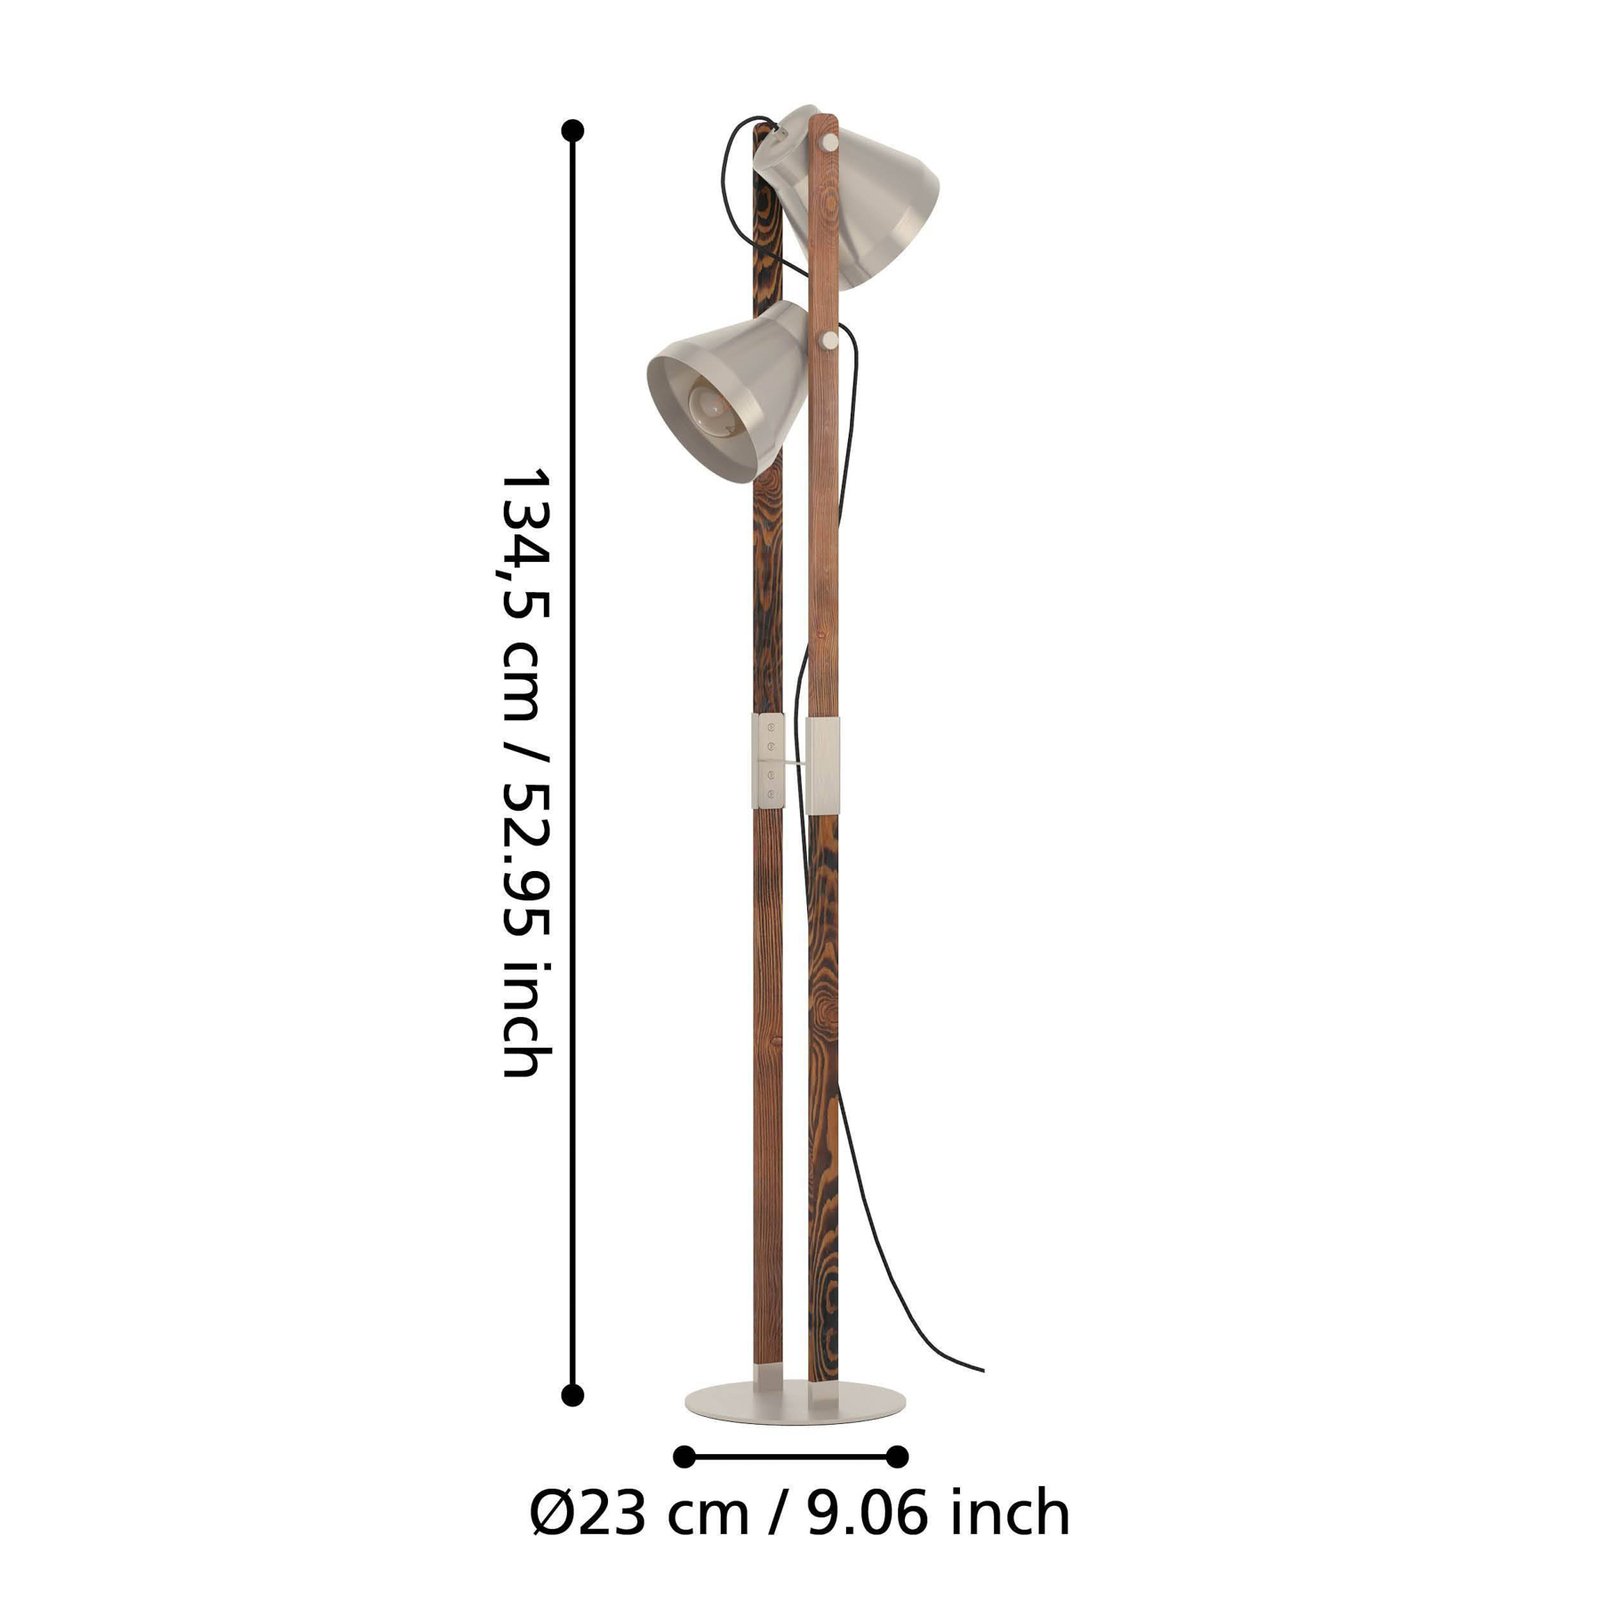 Cawton gulvlampe, højde 134,5 cm, stål/brun, 2 lyskilder i stål